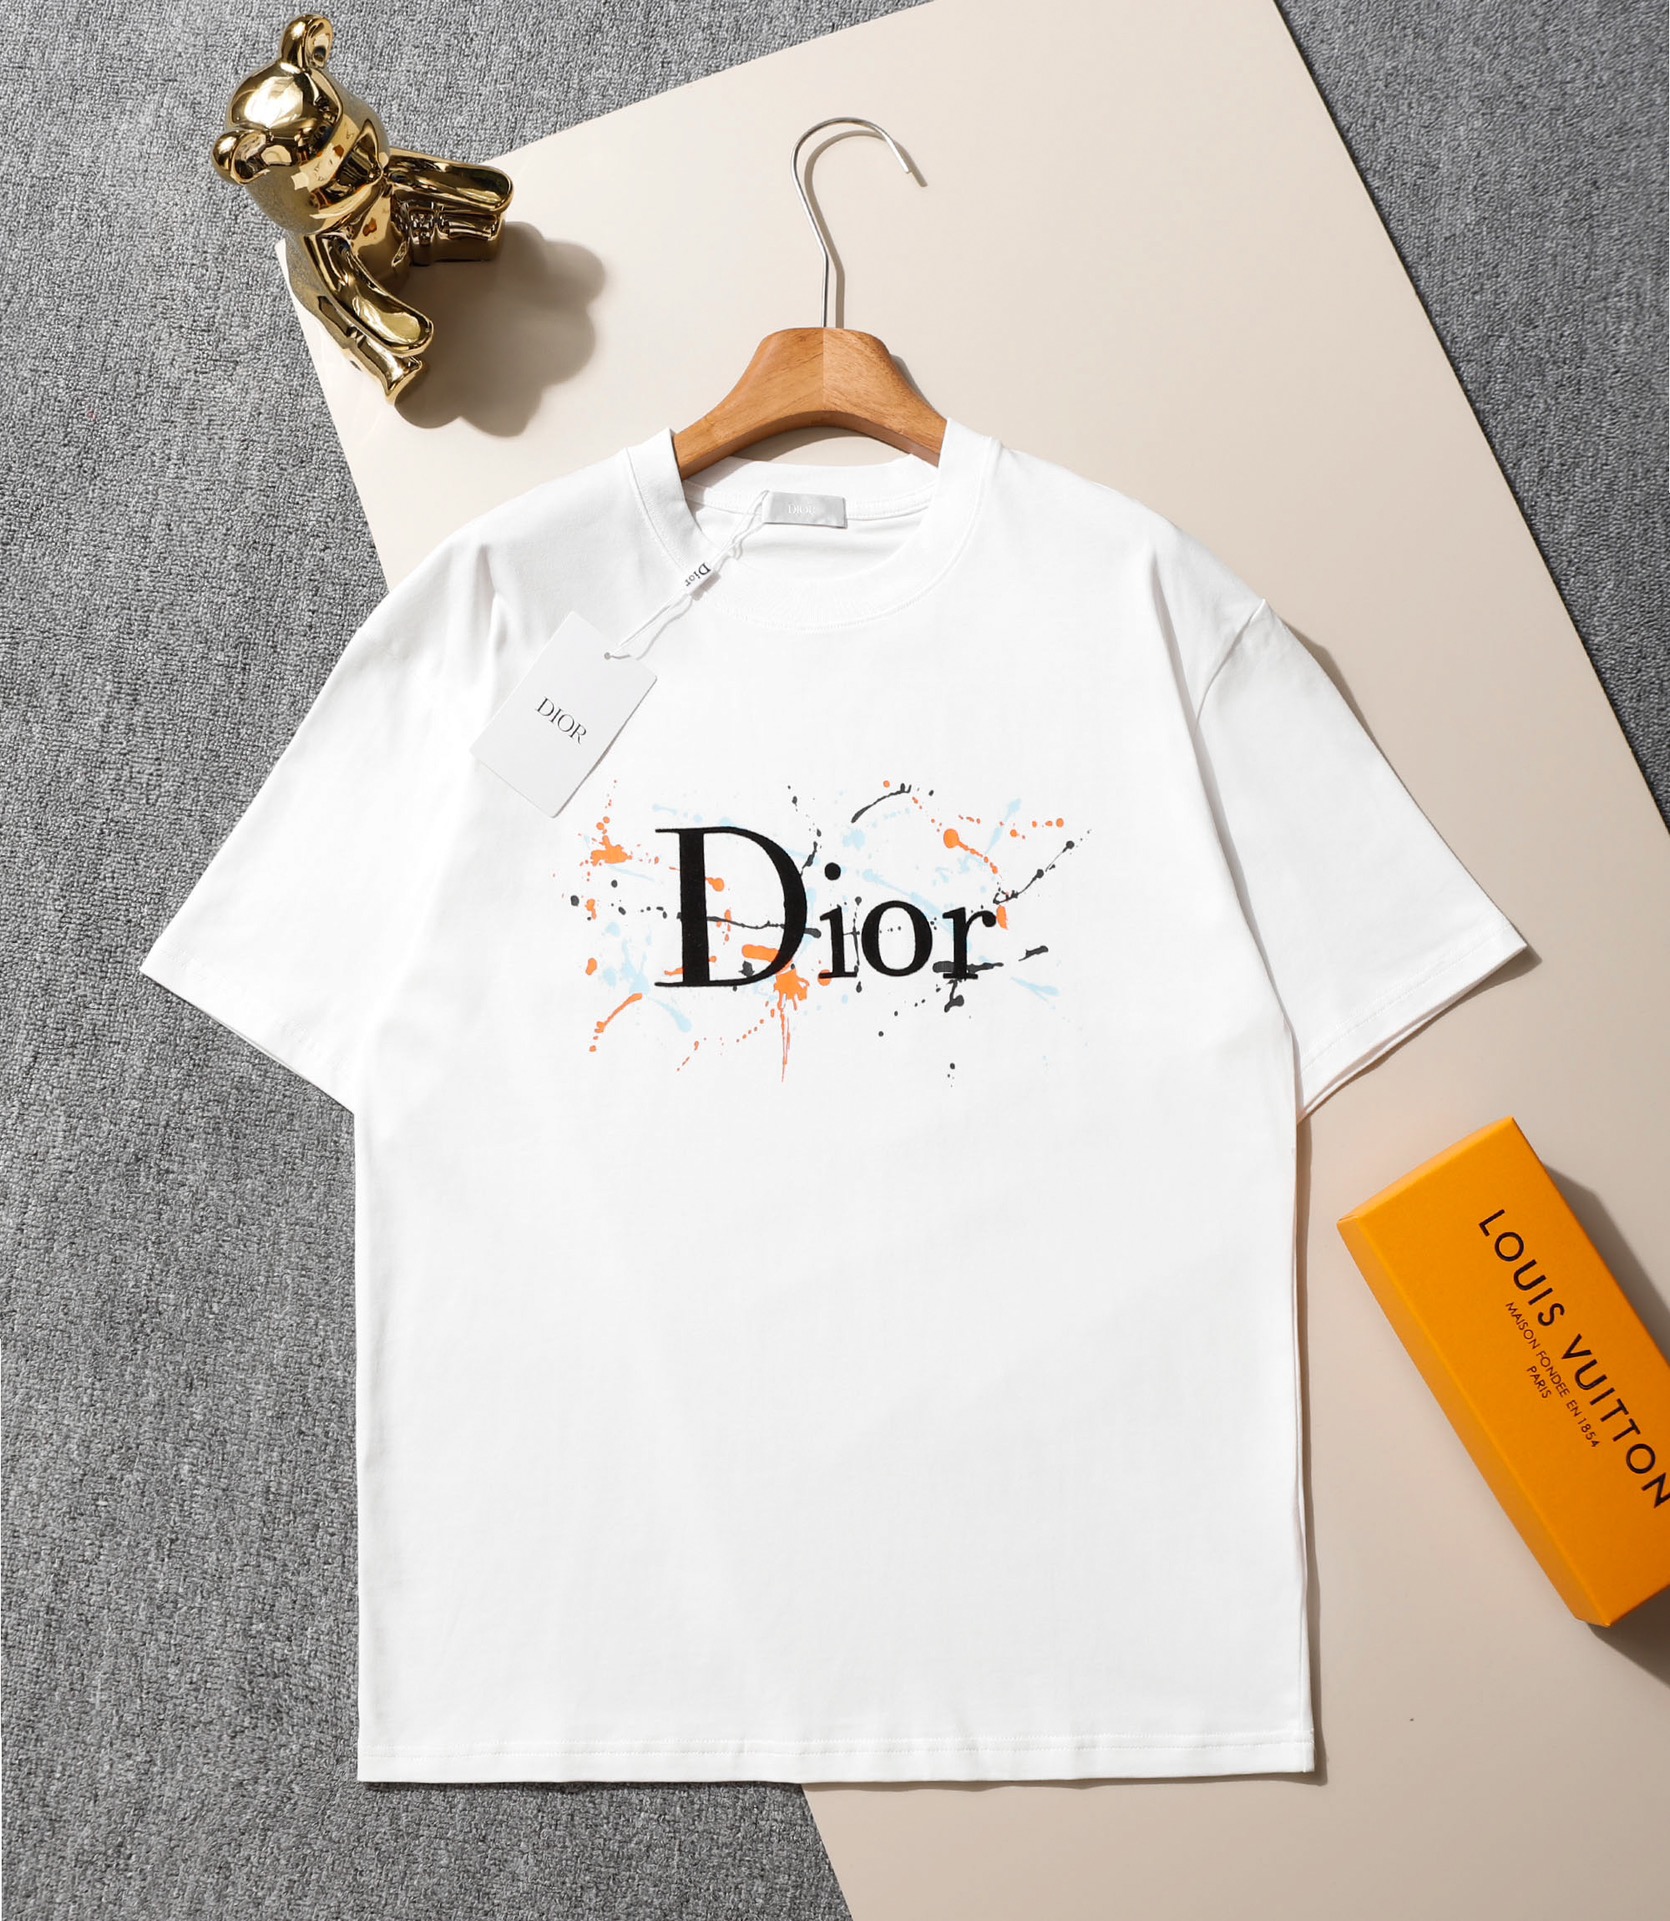 Dior AAAAA+
 Clothing T-Shirt Black White Printing Cotton Fashion Short Sleeve